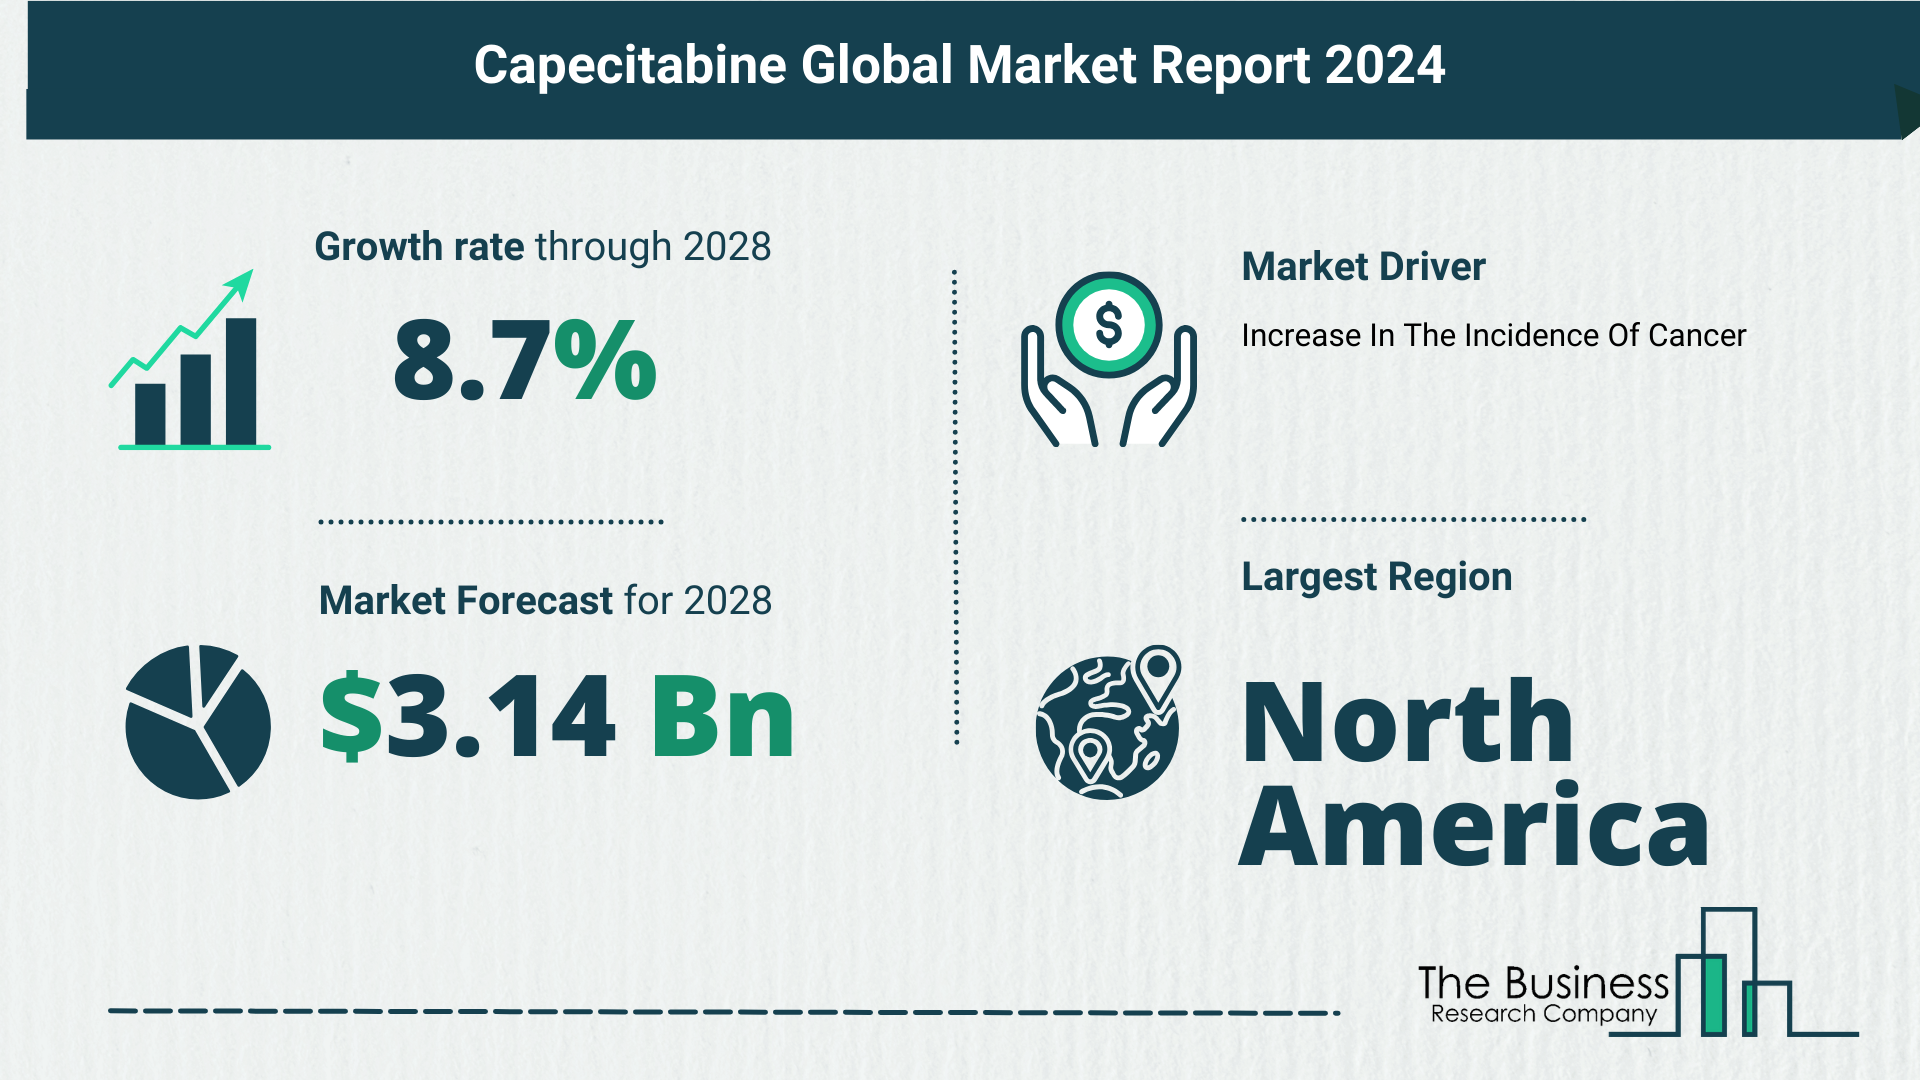 Global Capecitabine Market